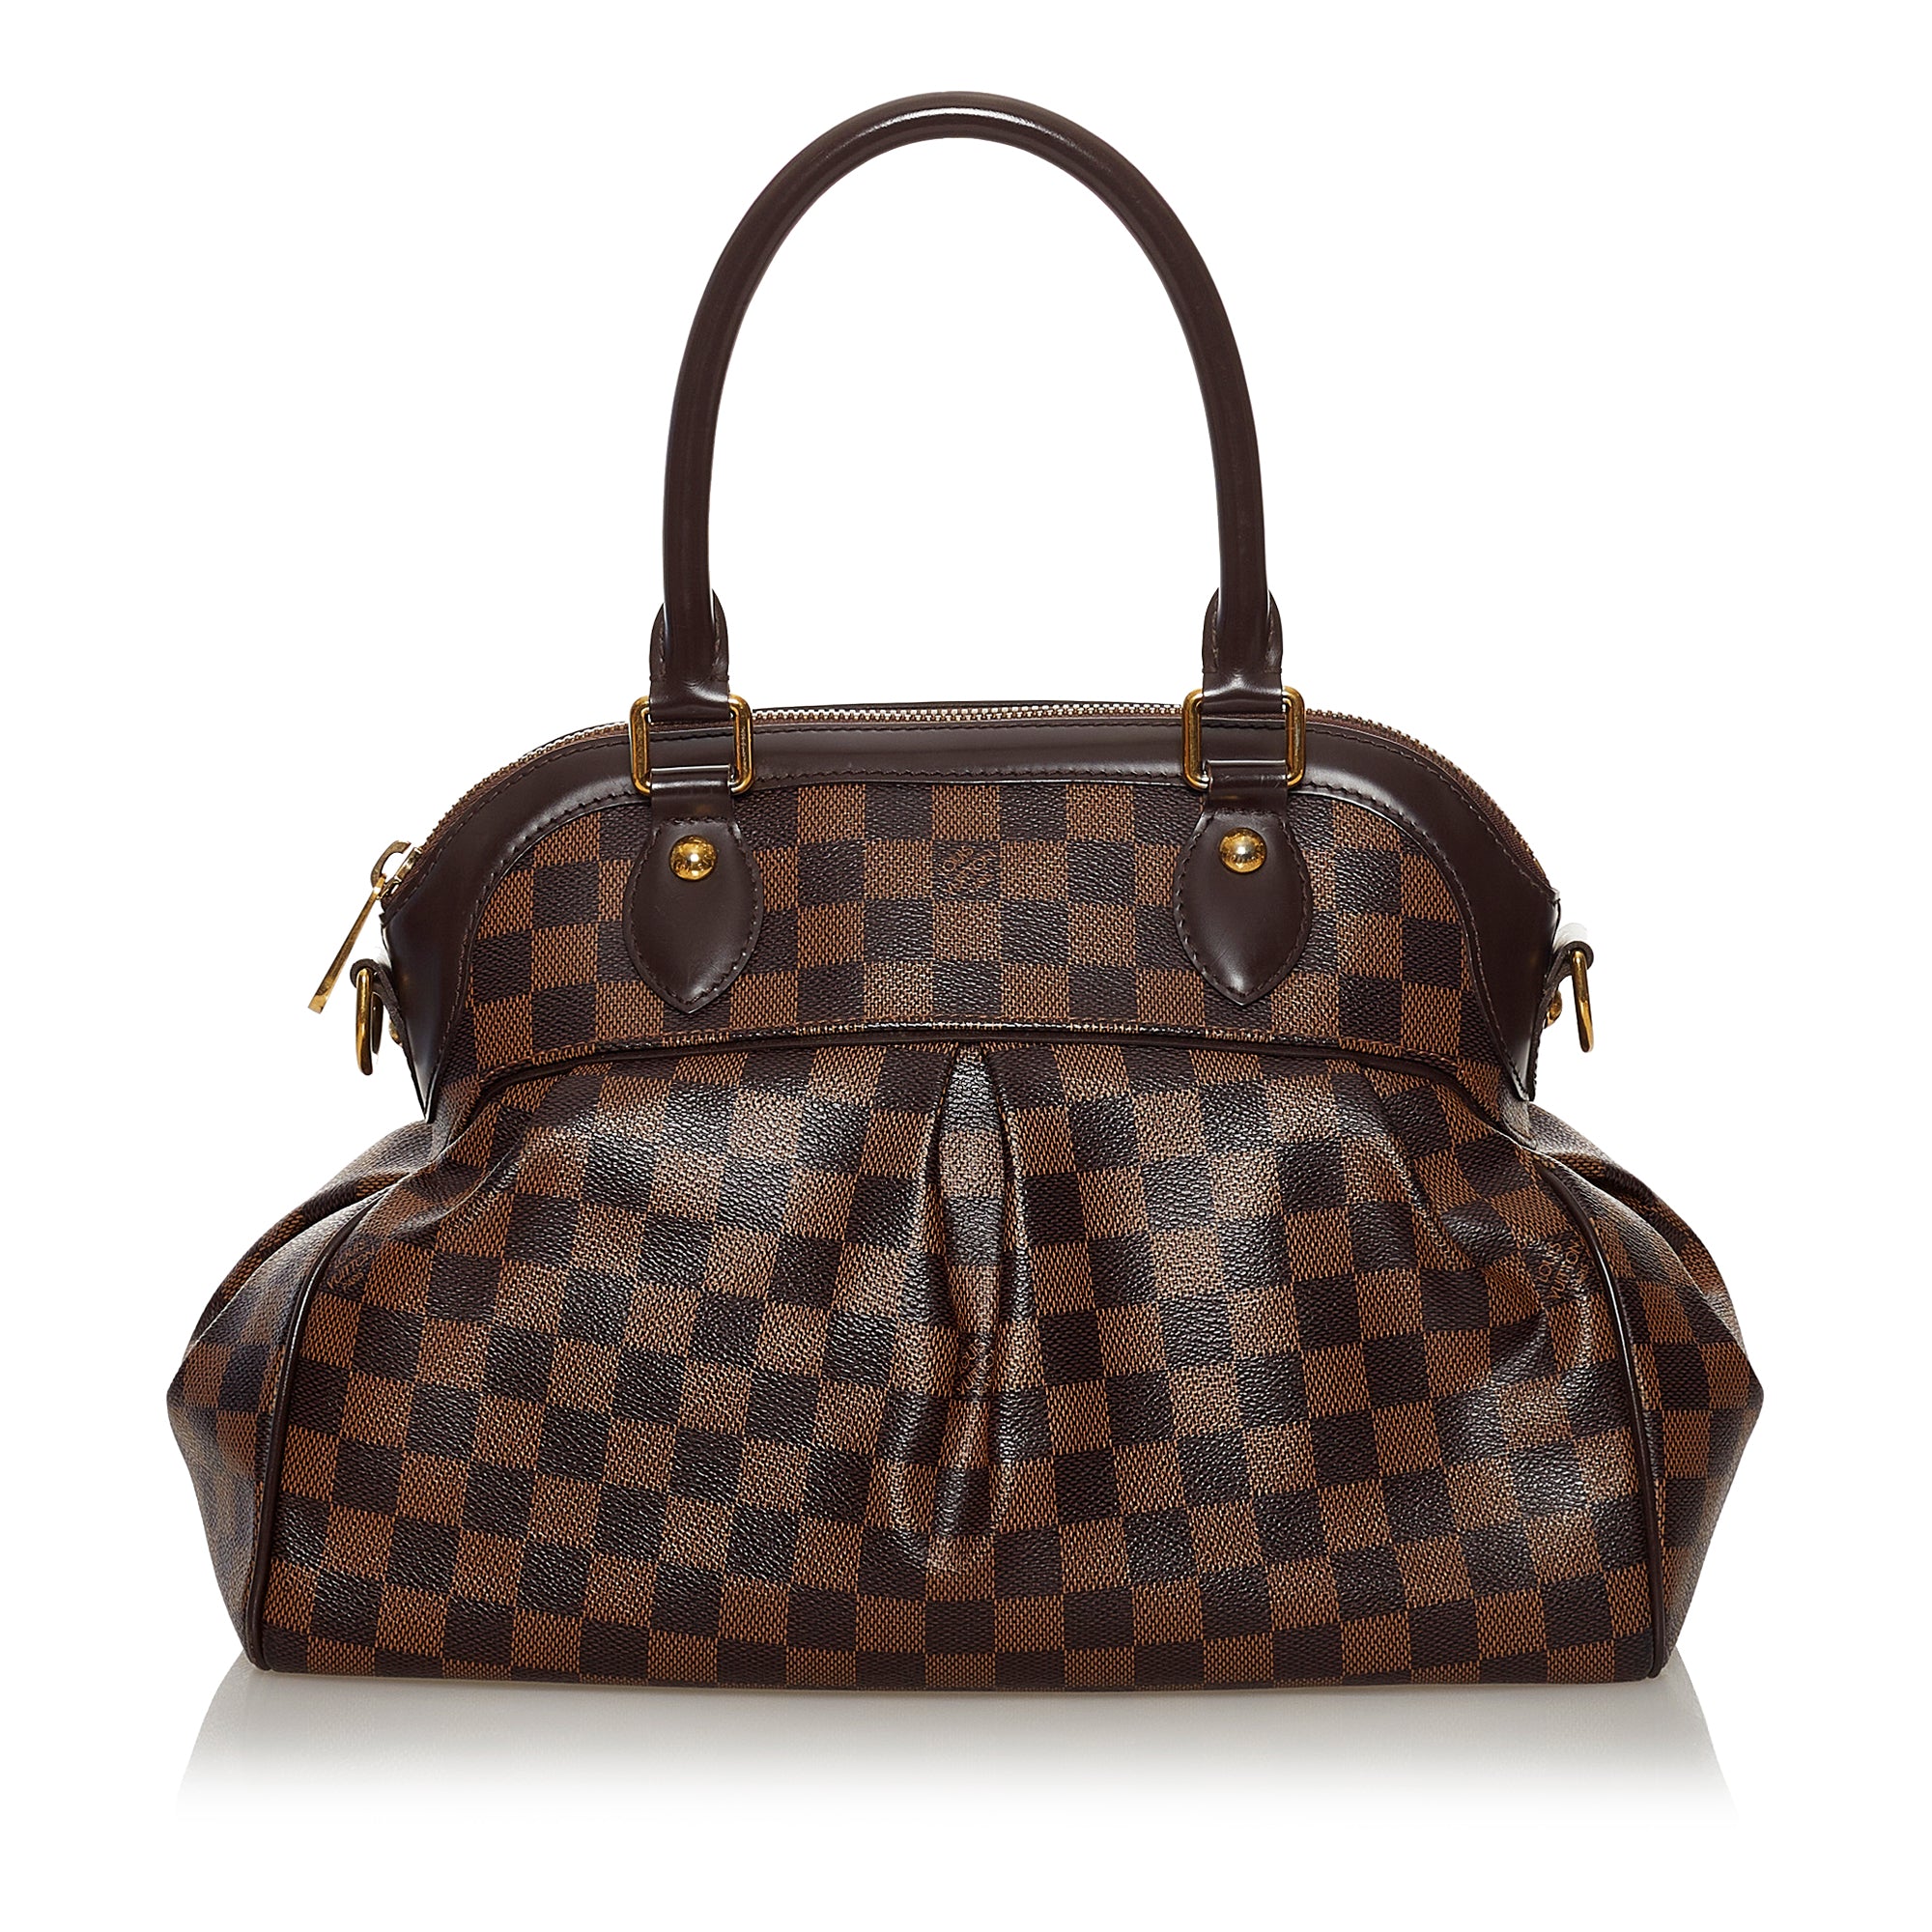 Louis Vuitton, LV logo handbags - clothing & accessories - by owner -  apparel sale - craigslist